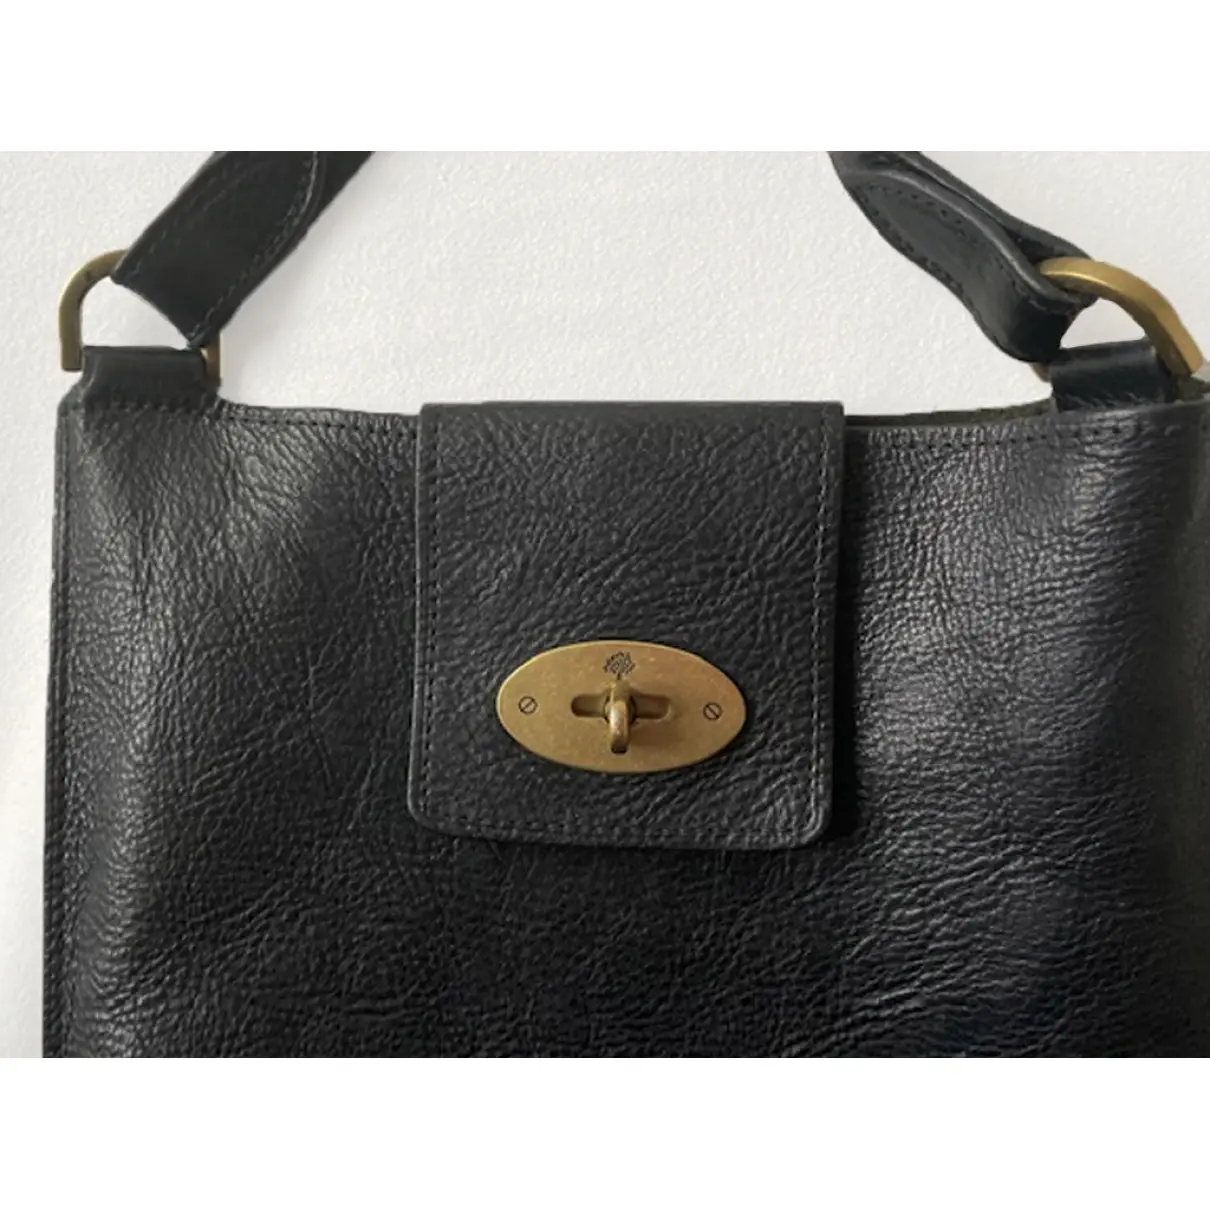 Antony leather bag Mulberry